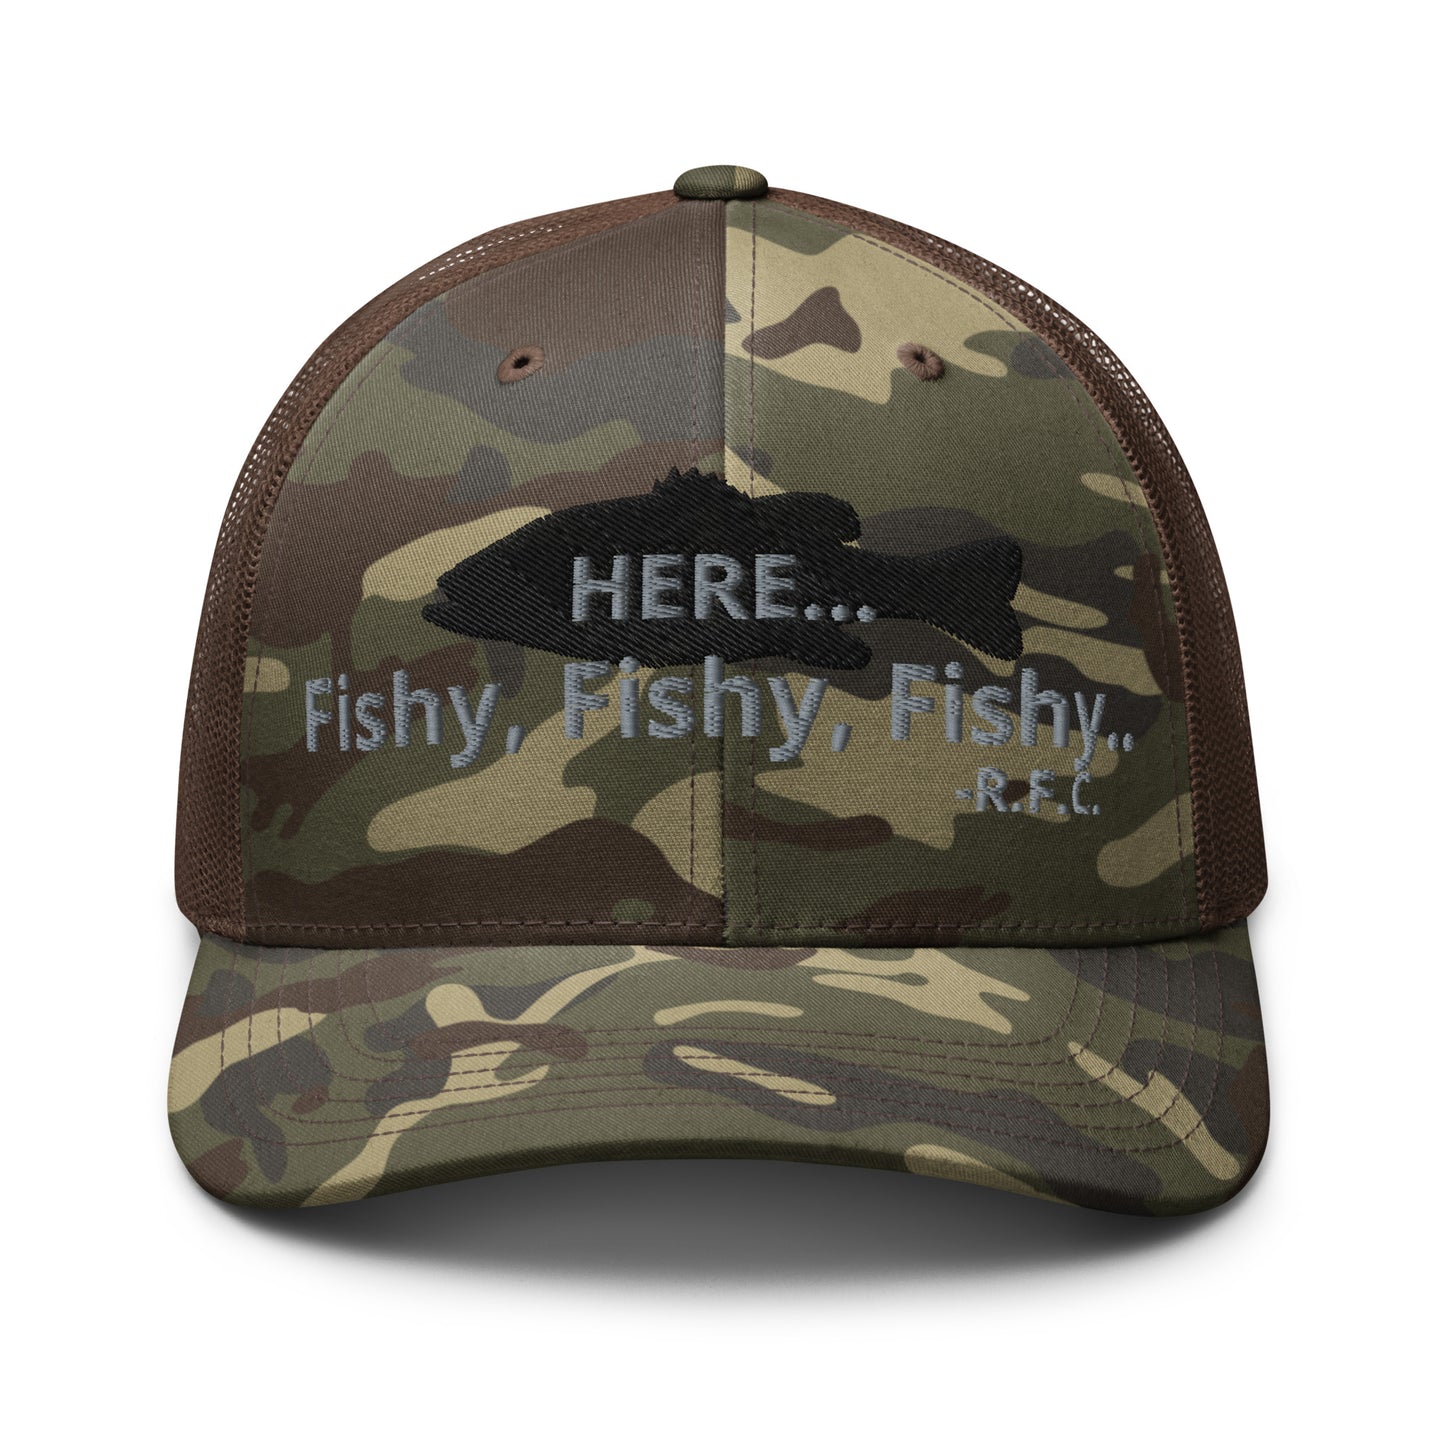 Here Fishy Fishy Camouflage trucker hat